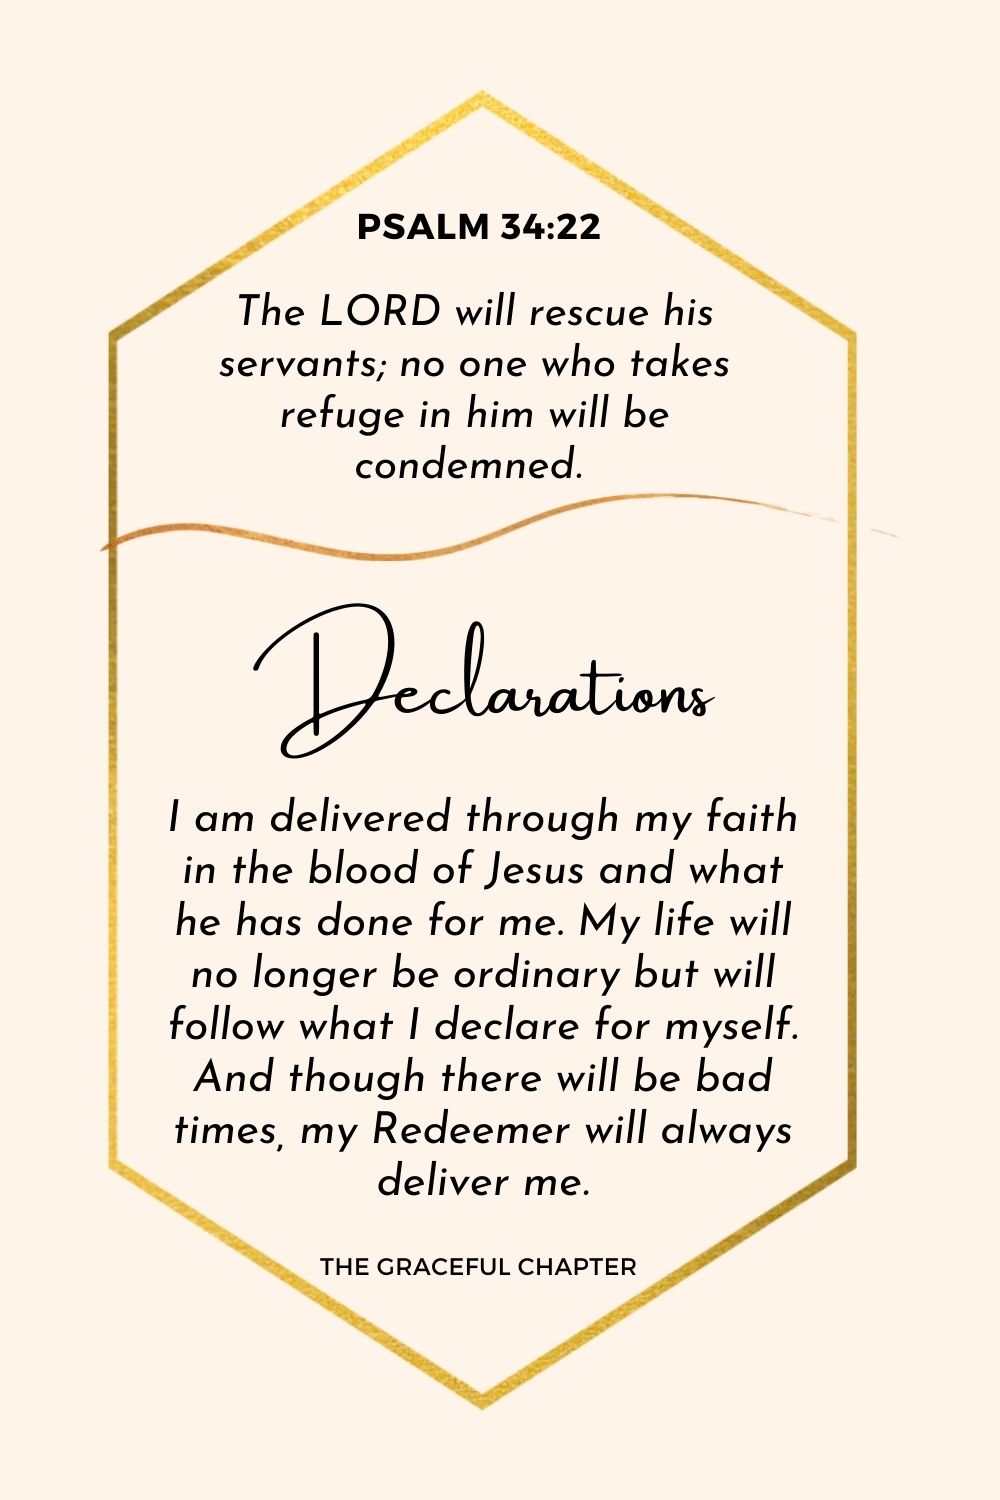 Psalm 34:22 declaration